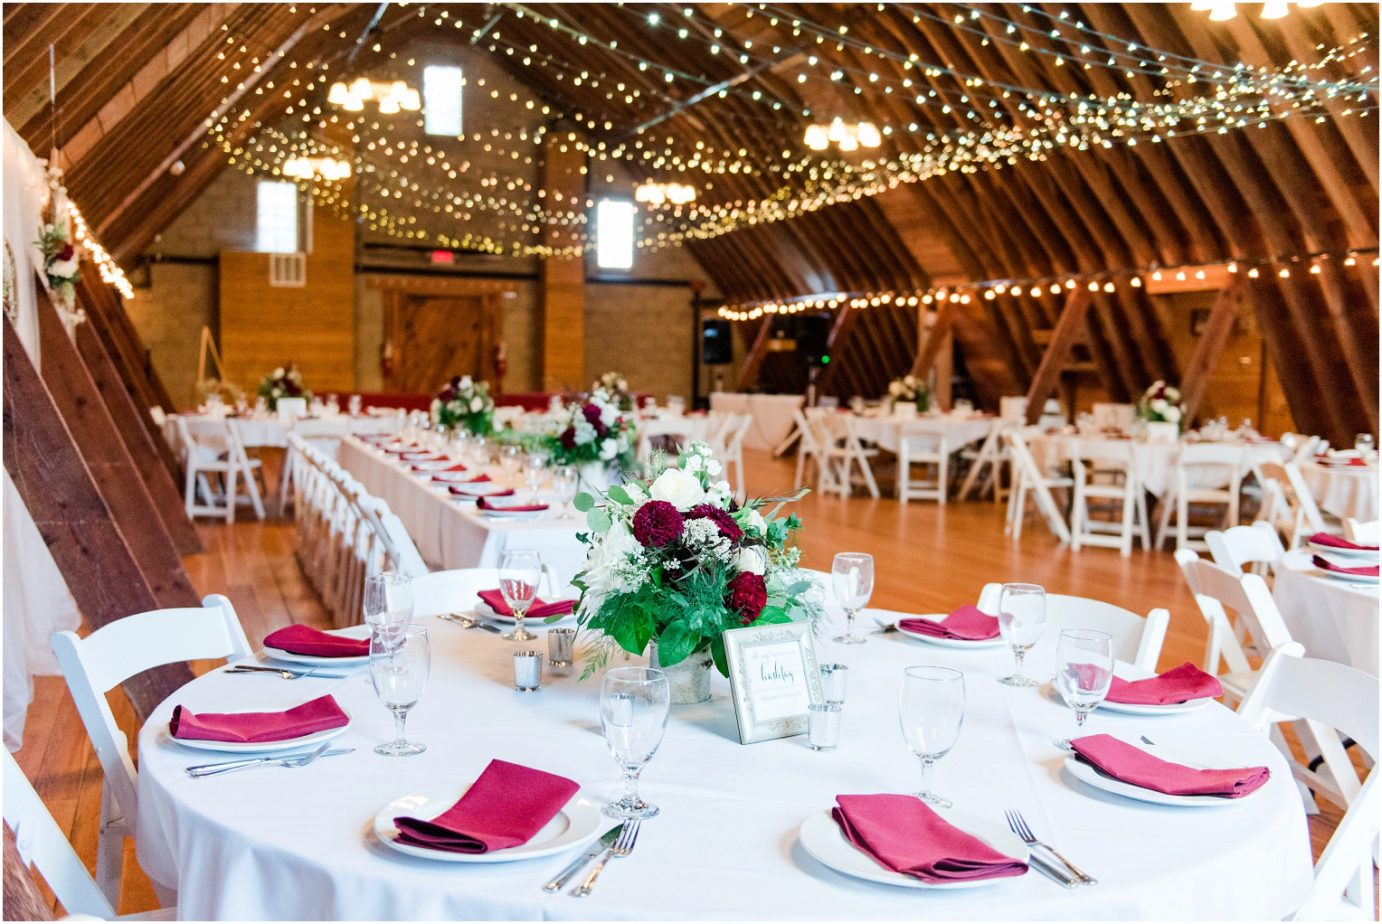 Pine River Ranch Wedding Reception Details Photo